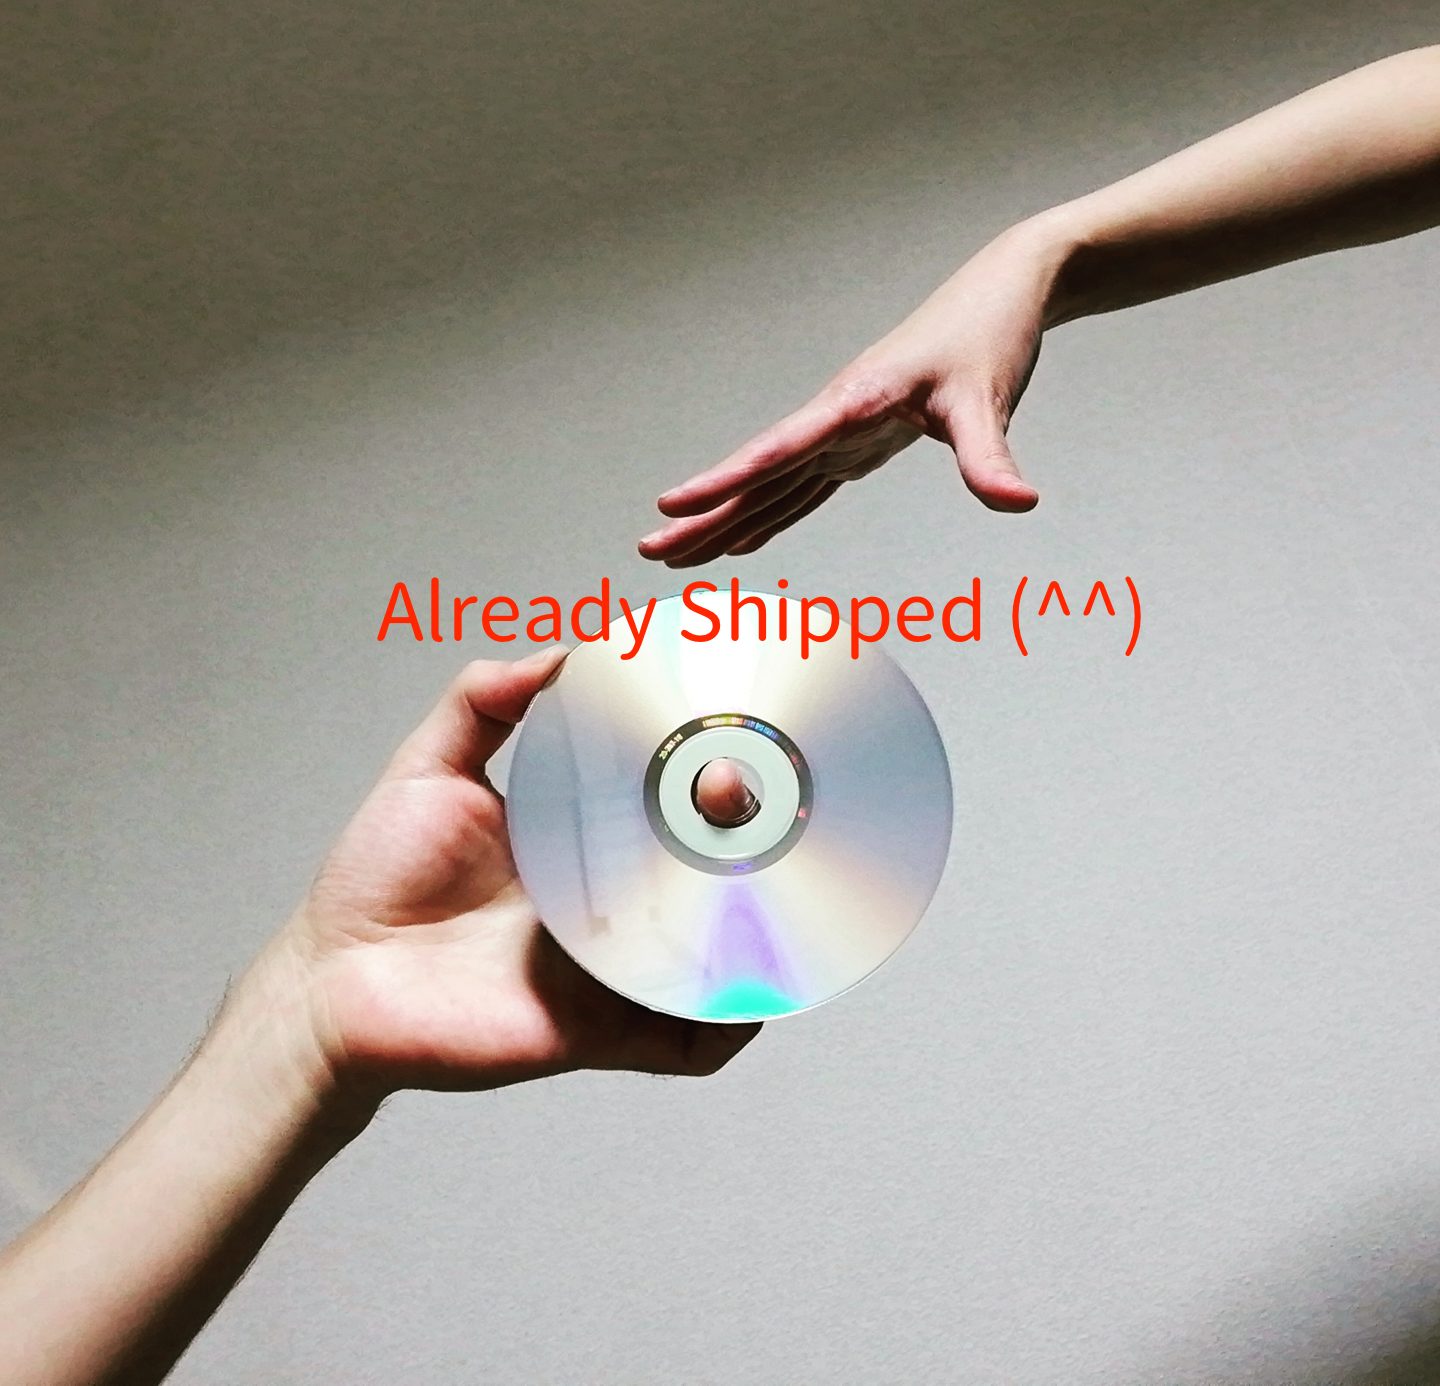 CDs shipped!